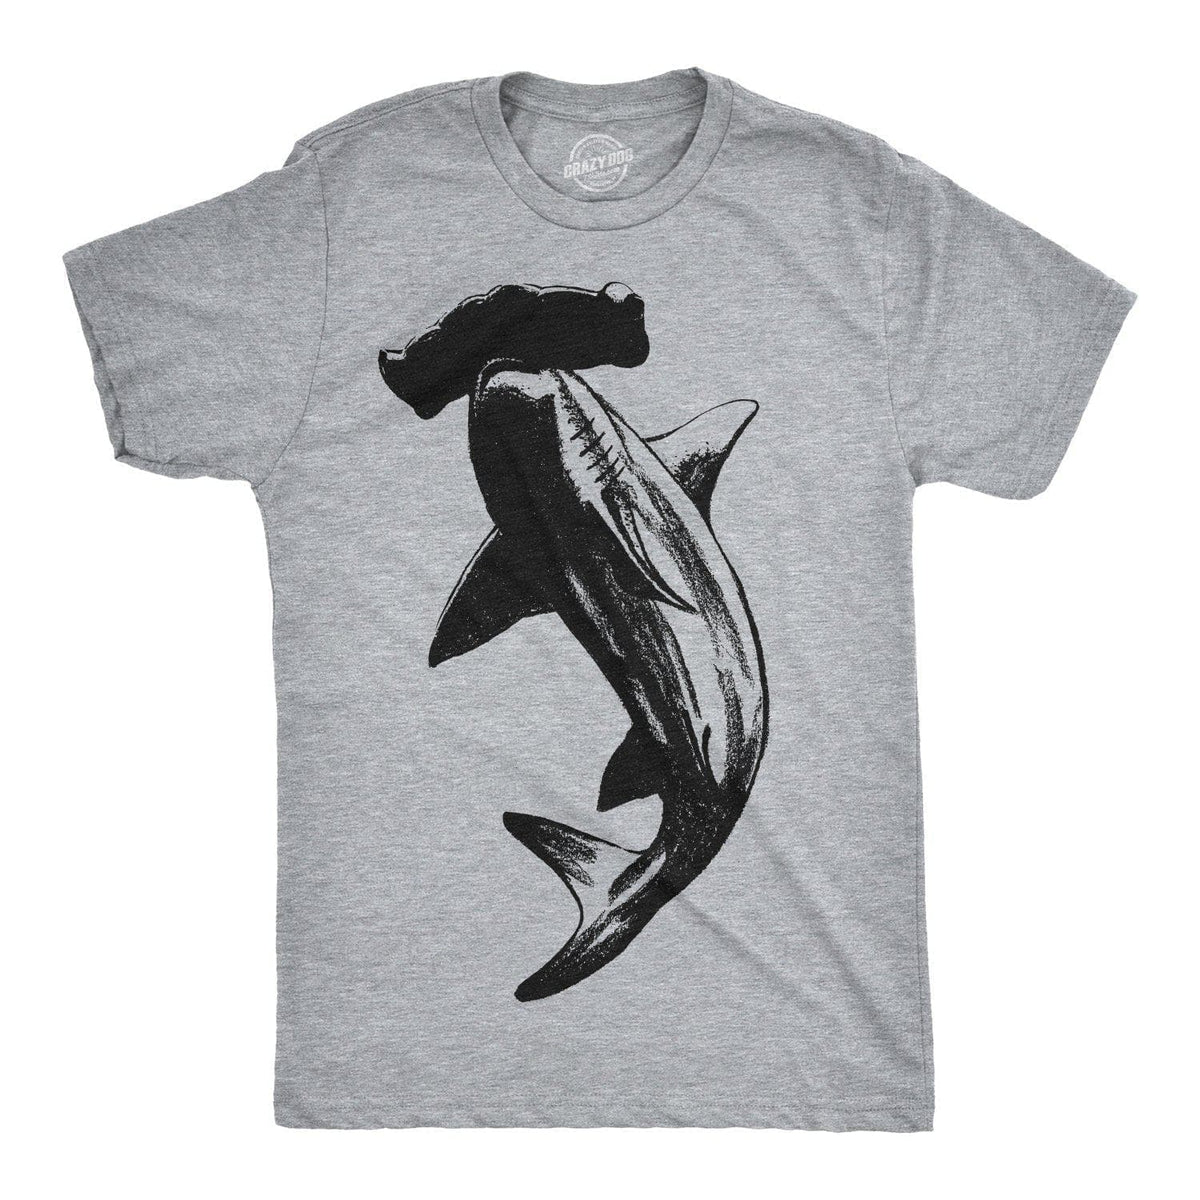 Mens Hammerhead Shark T Shirt Cool Aquatic Wildlife Graphic Tee (Grey) 4XL